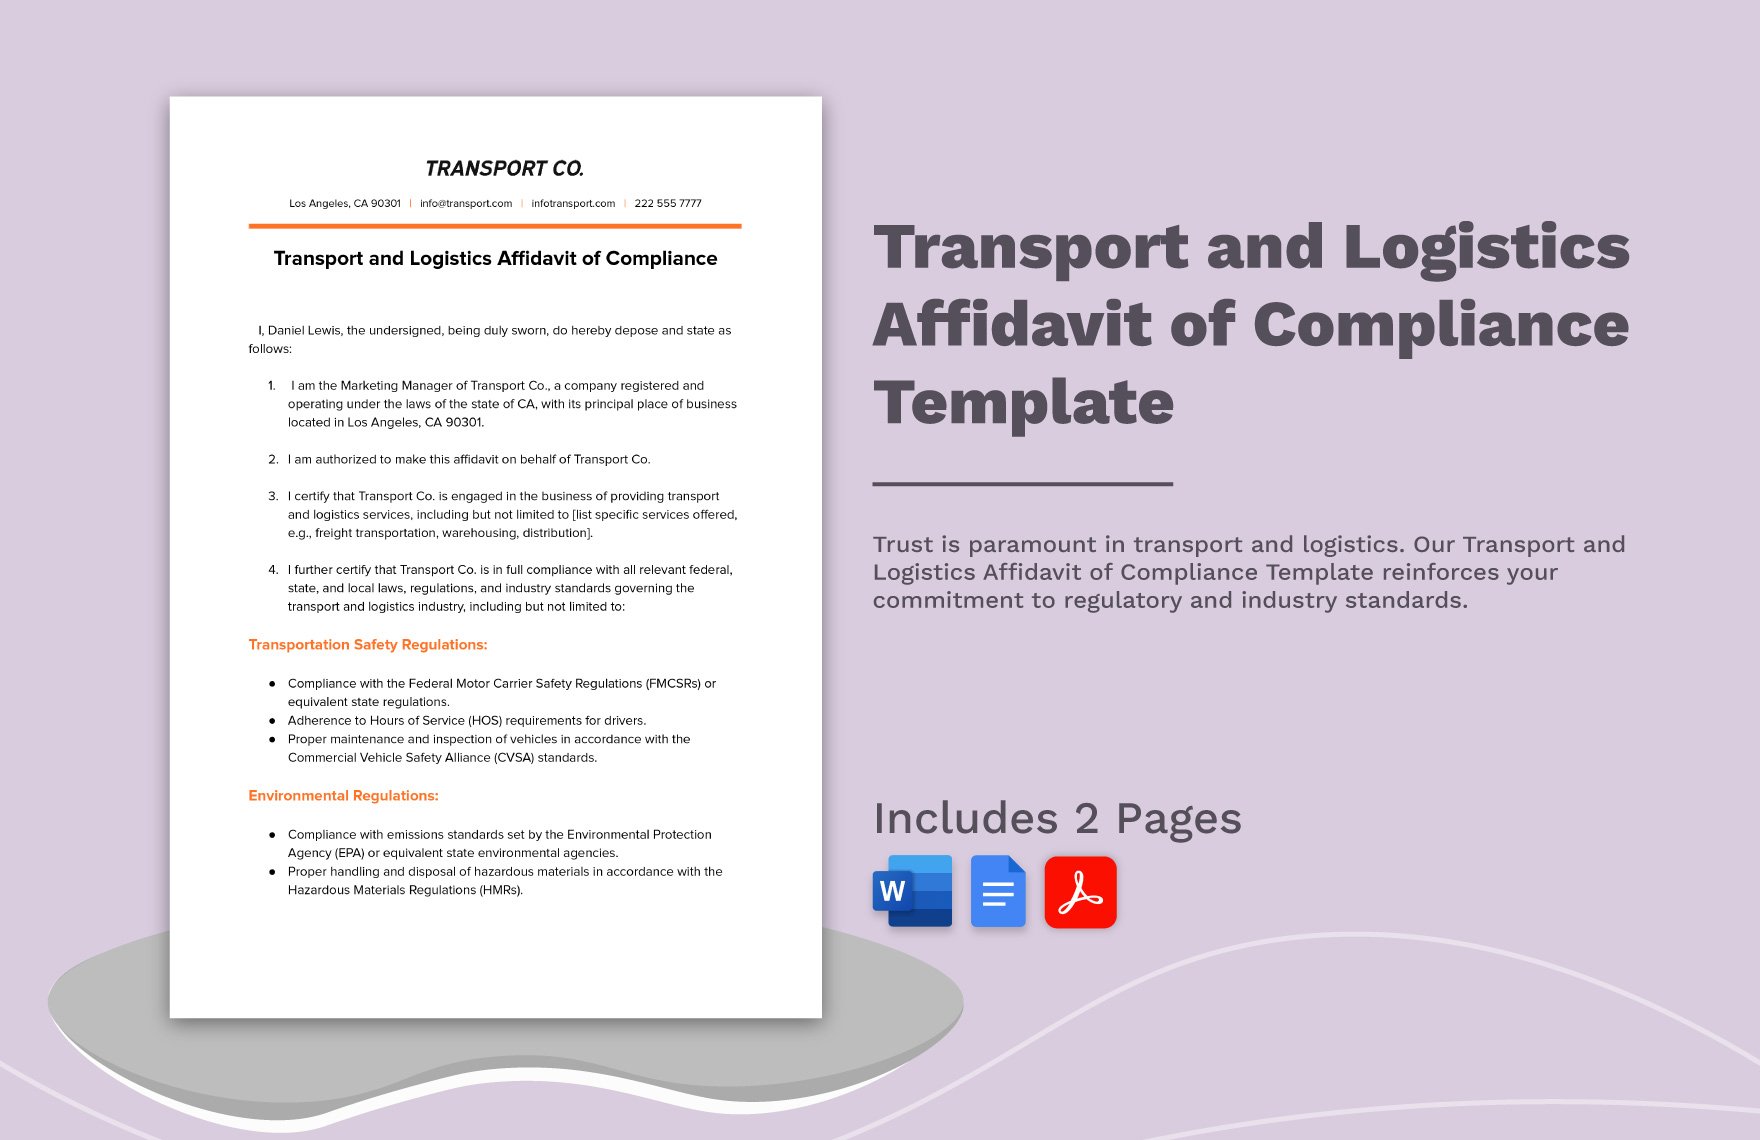 Transport and Logistics Affidavit of Compliance Template